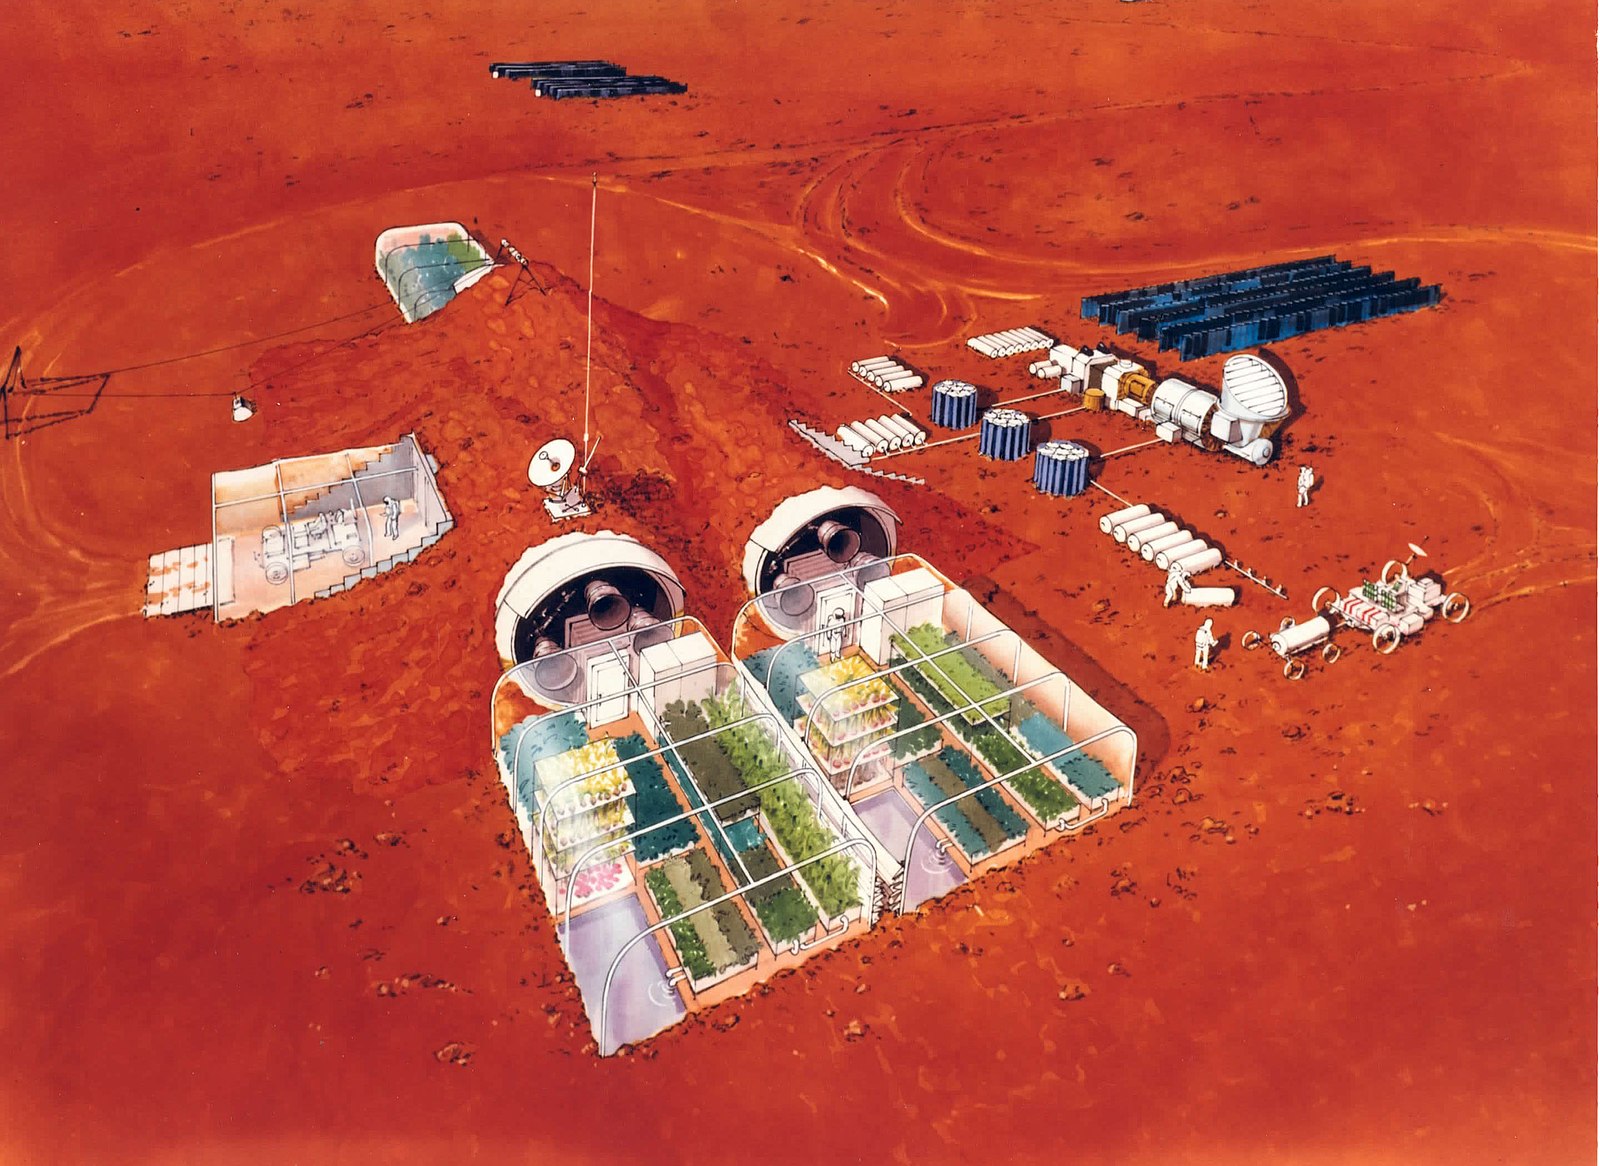 An image of Mars' current ground habitat (Source: NASA)